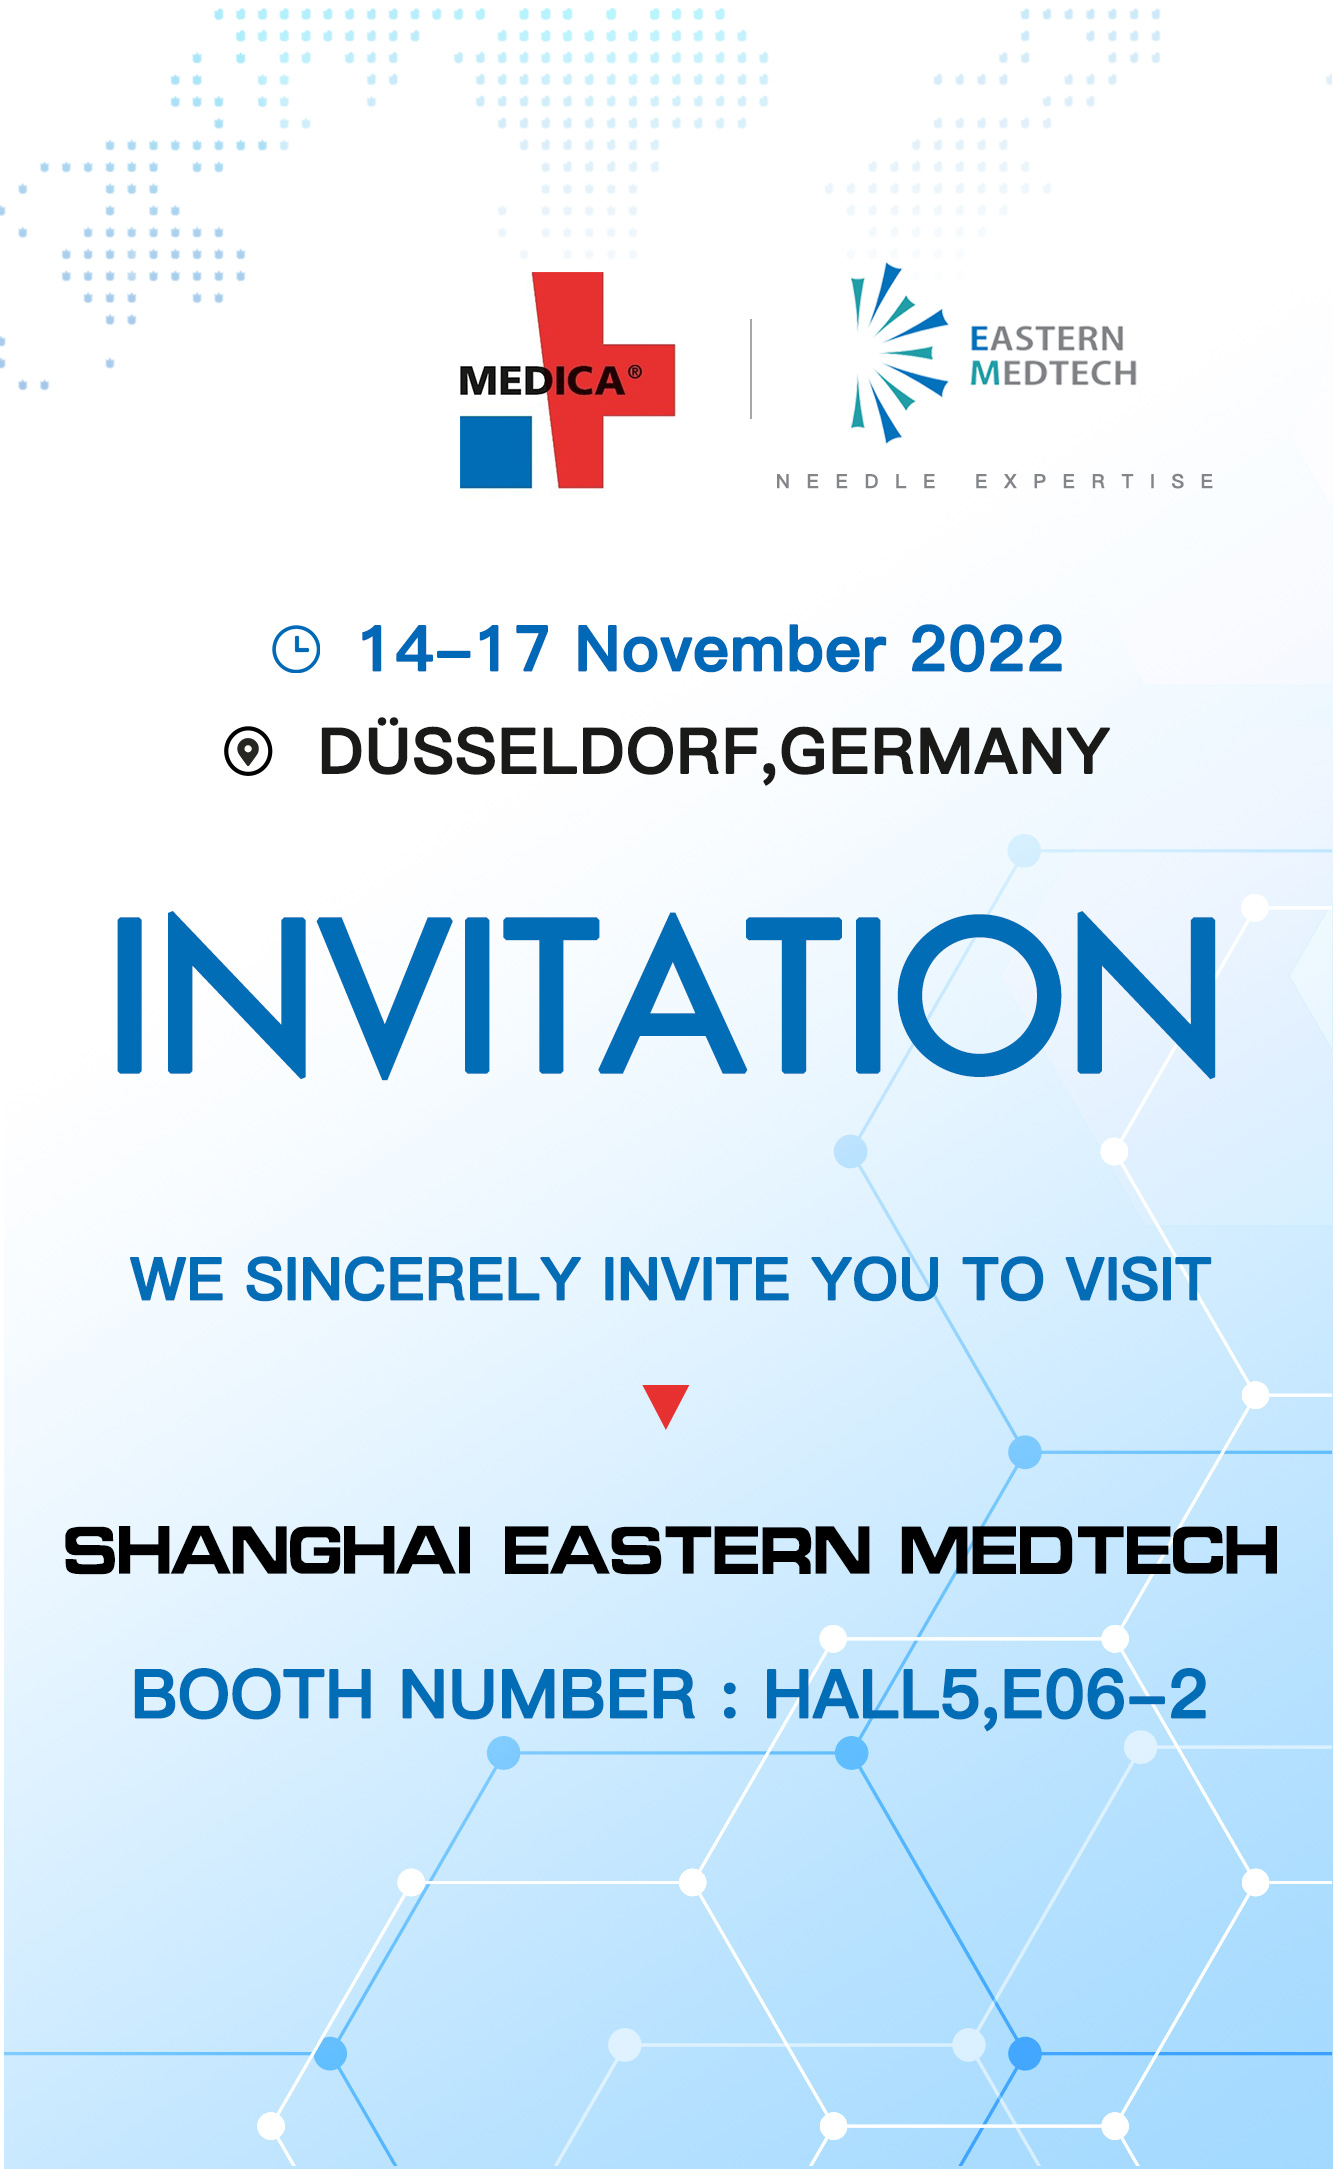 Welcome to visit us at MEDICA Dusseldorf 2022!